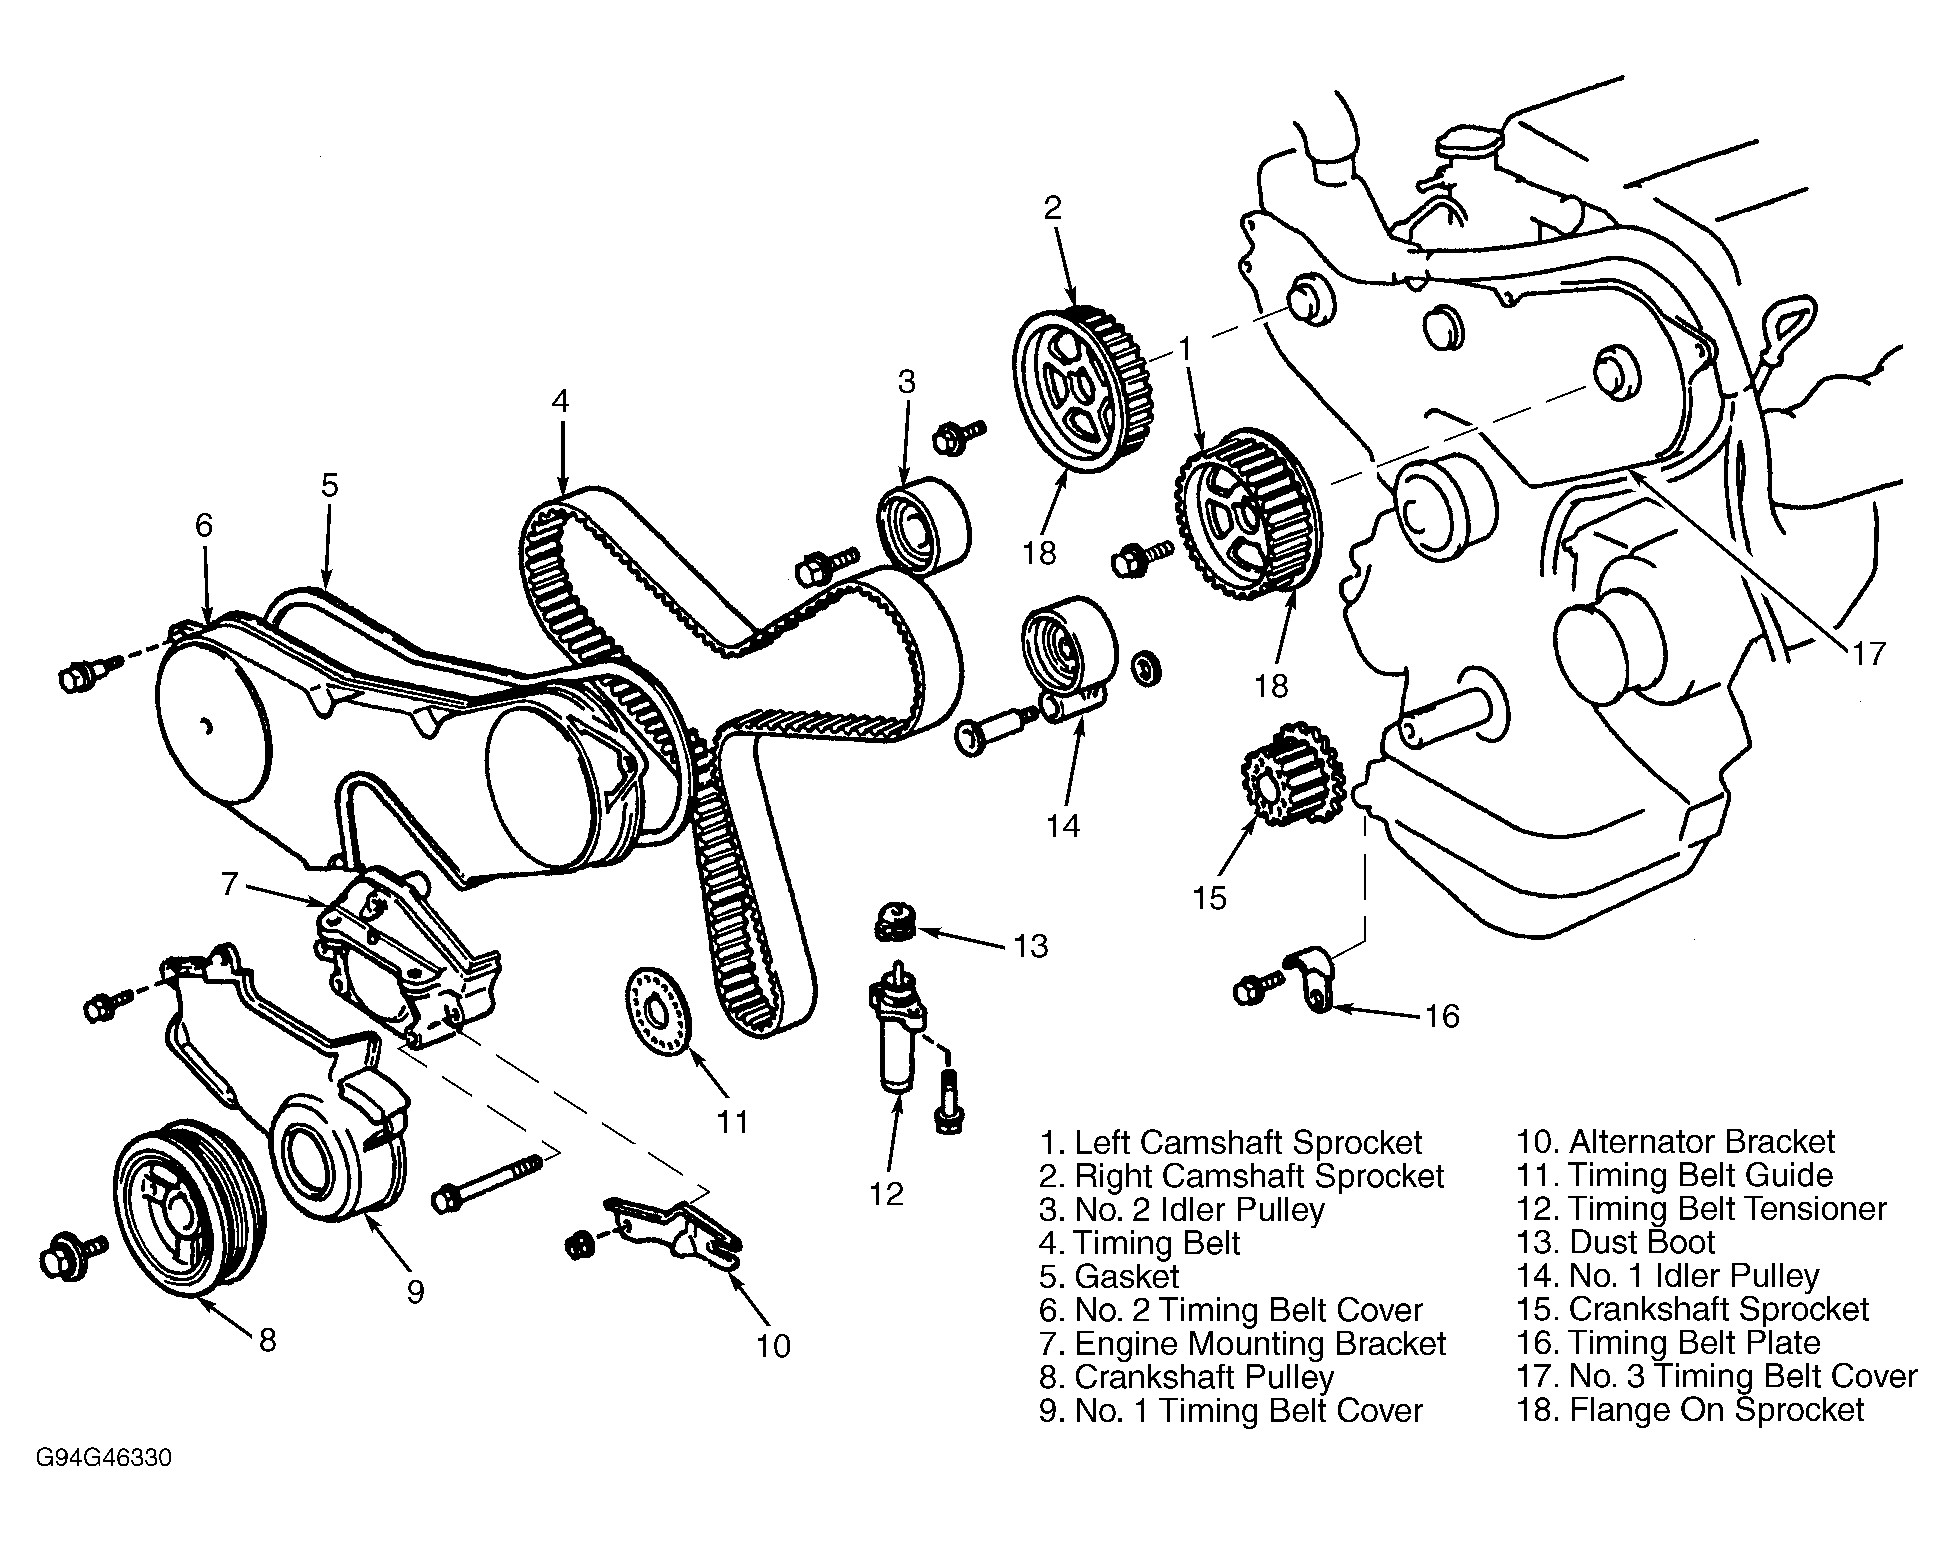 1994 toyota Camry Engine Diagram 95 toyota Camry Engine Diagram toyota Wiring Diagrams Instructions Of 1994 toyota Camry Engine Diagram